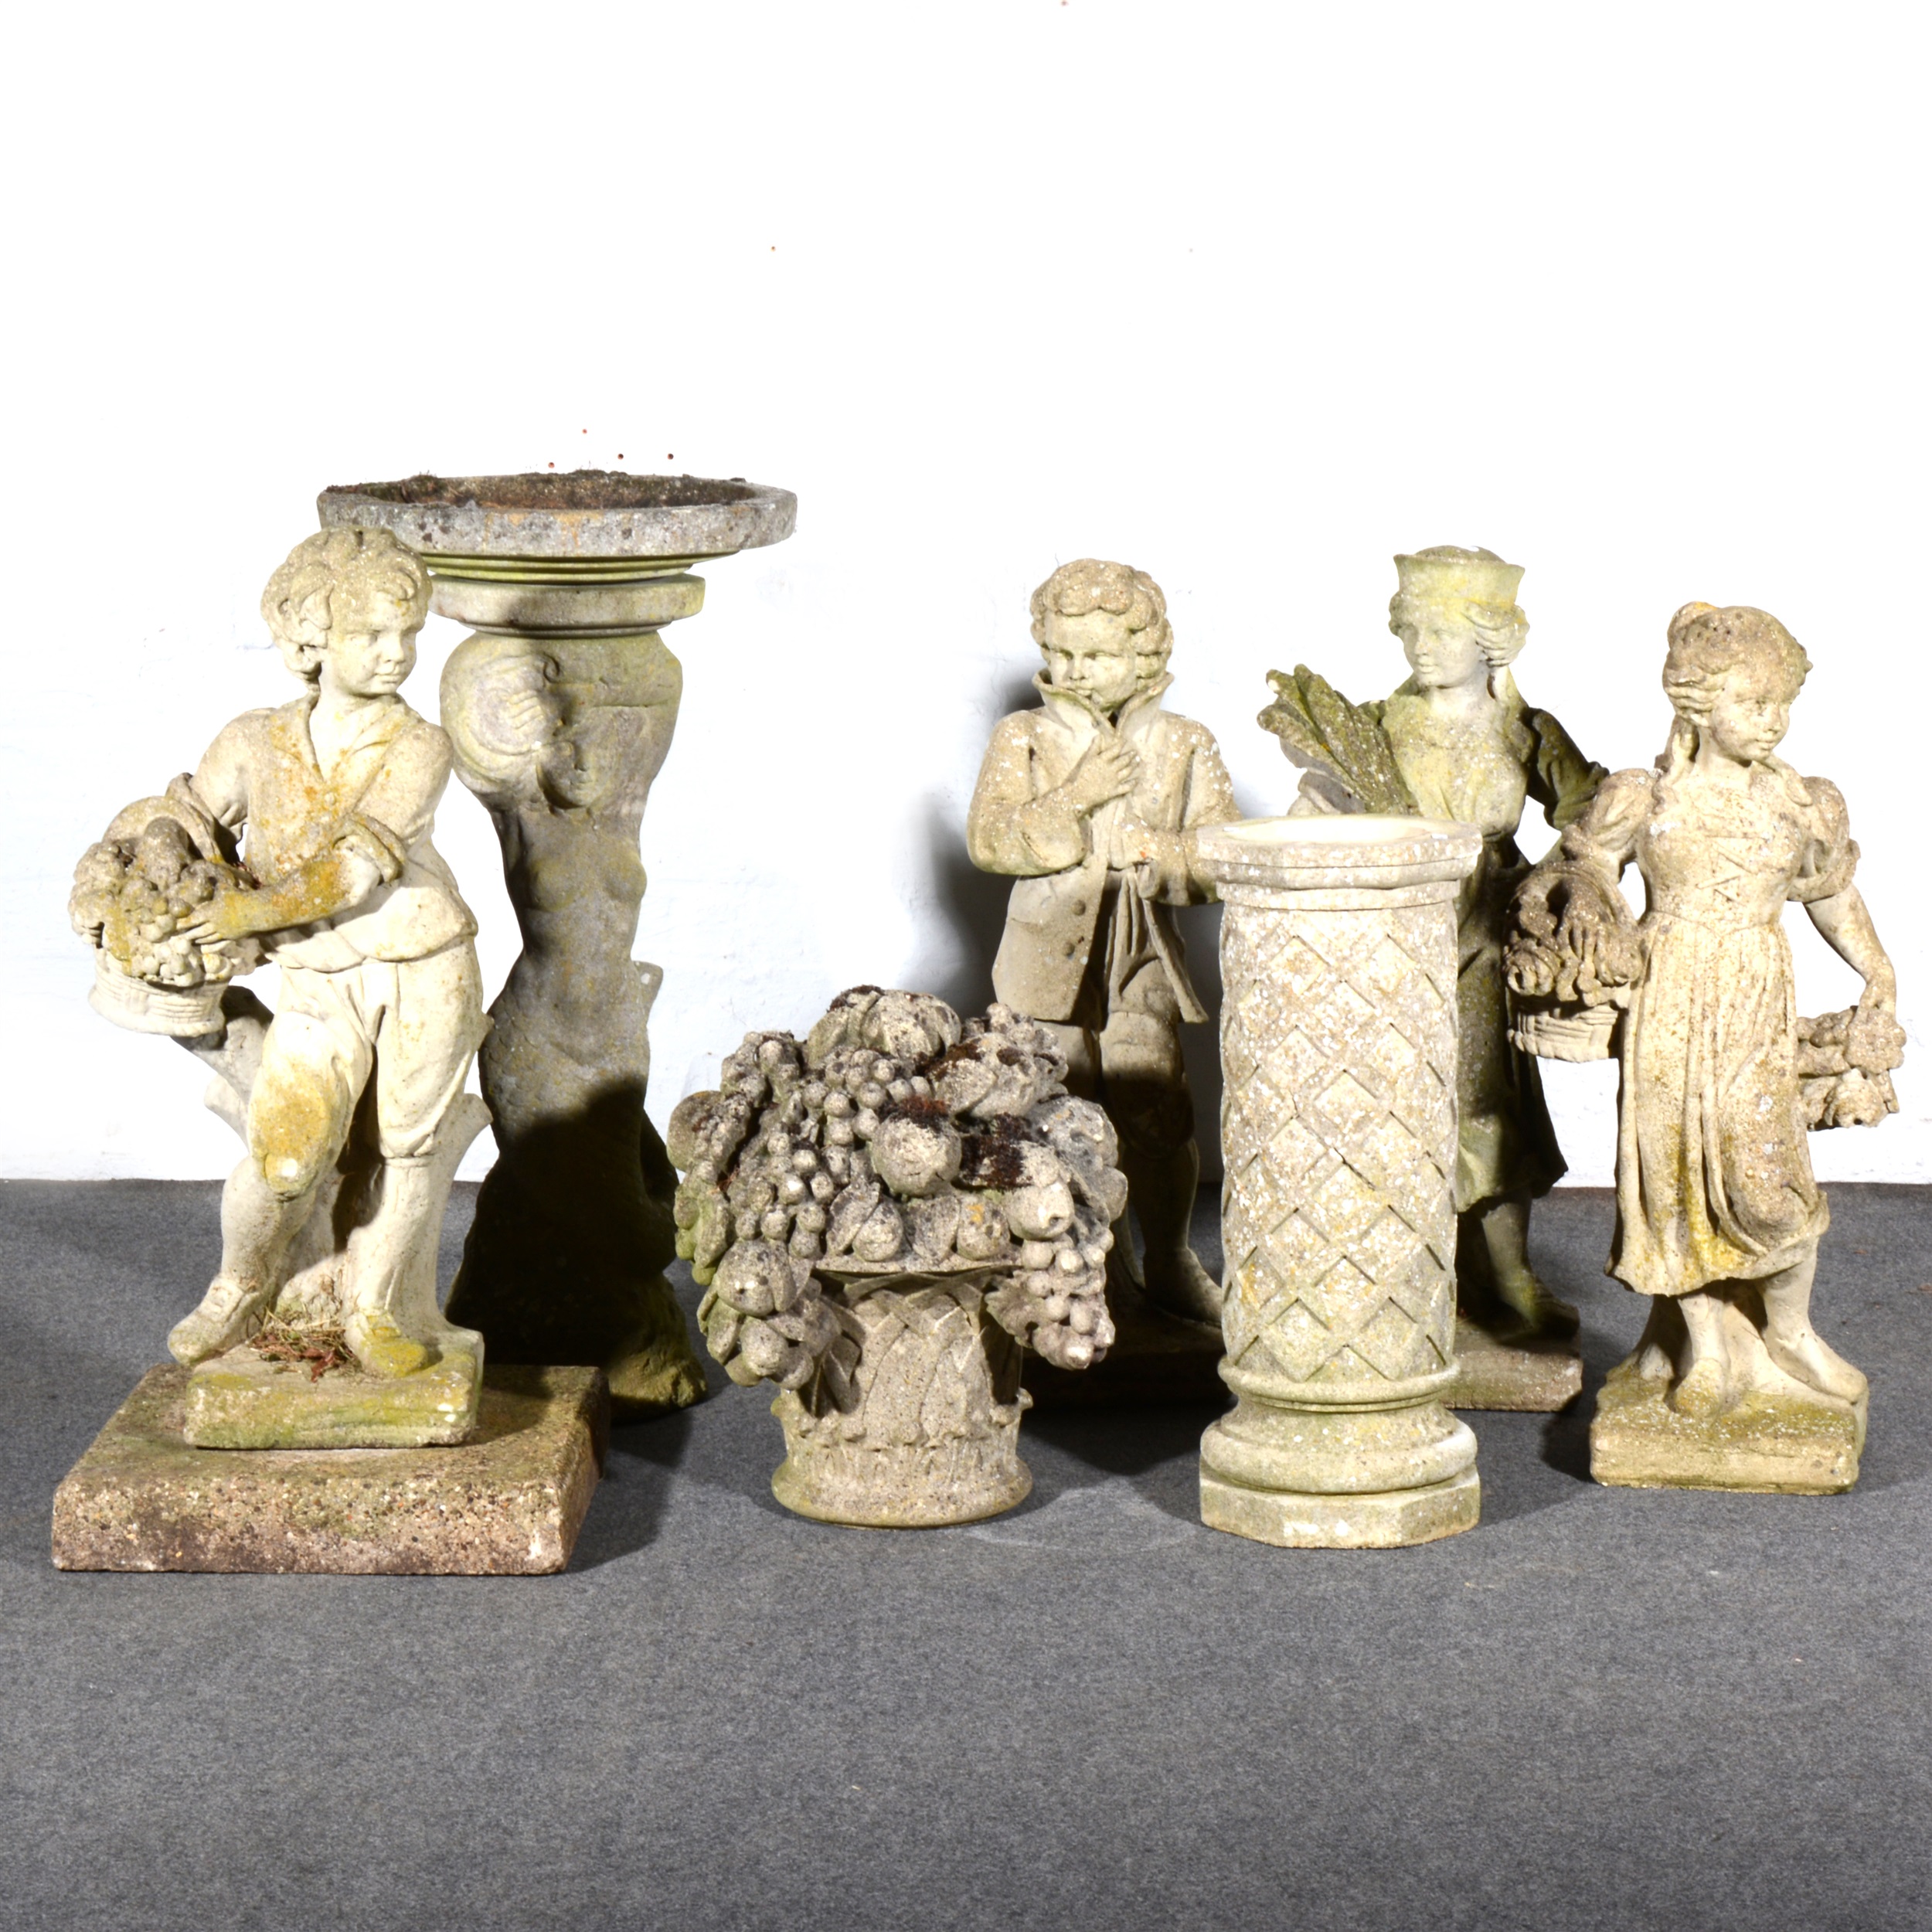 Four garden statues, a bird bath, and a decorative garden pedestal with fruiting urn.